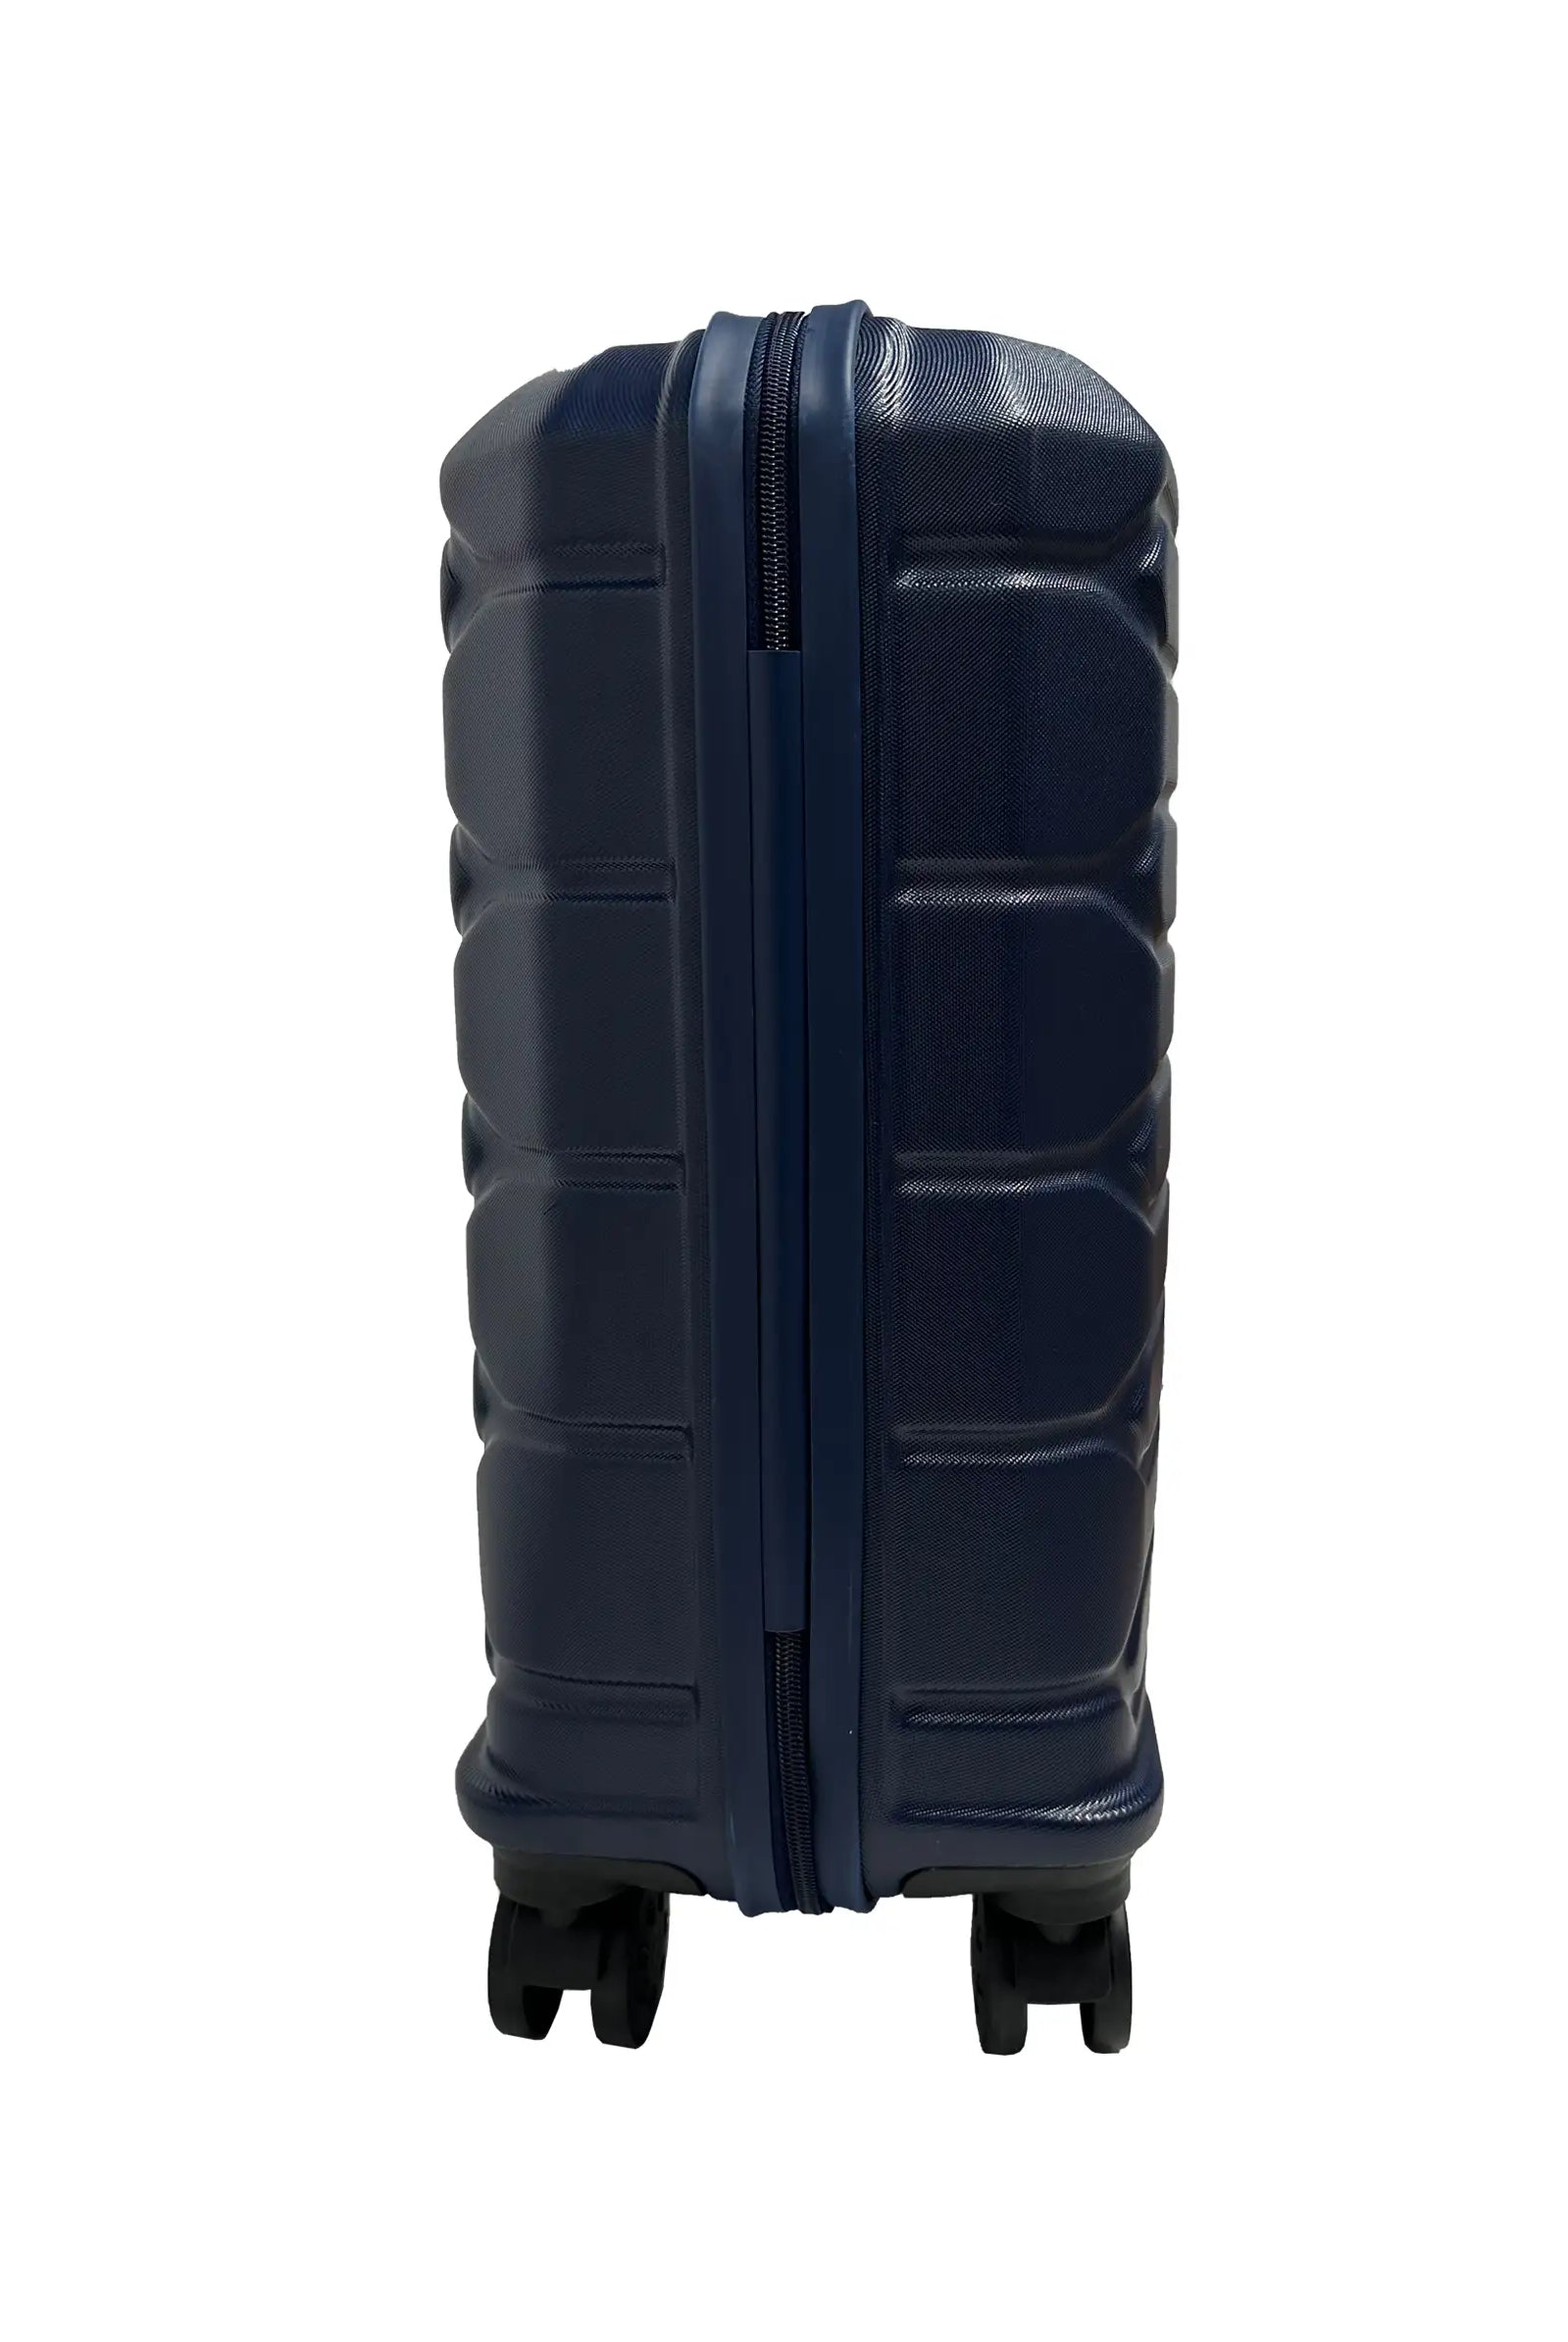 jasmin small cabin suitcase uk